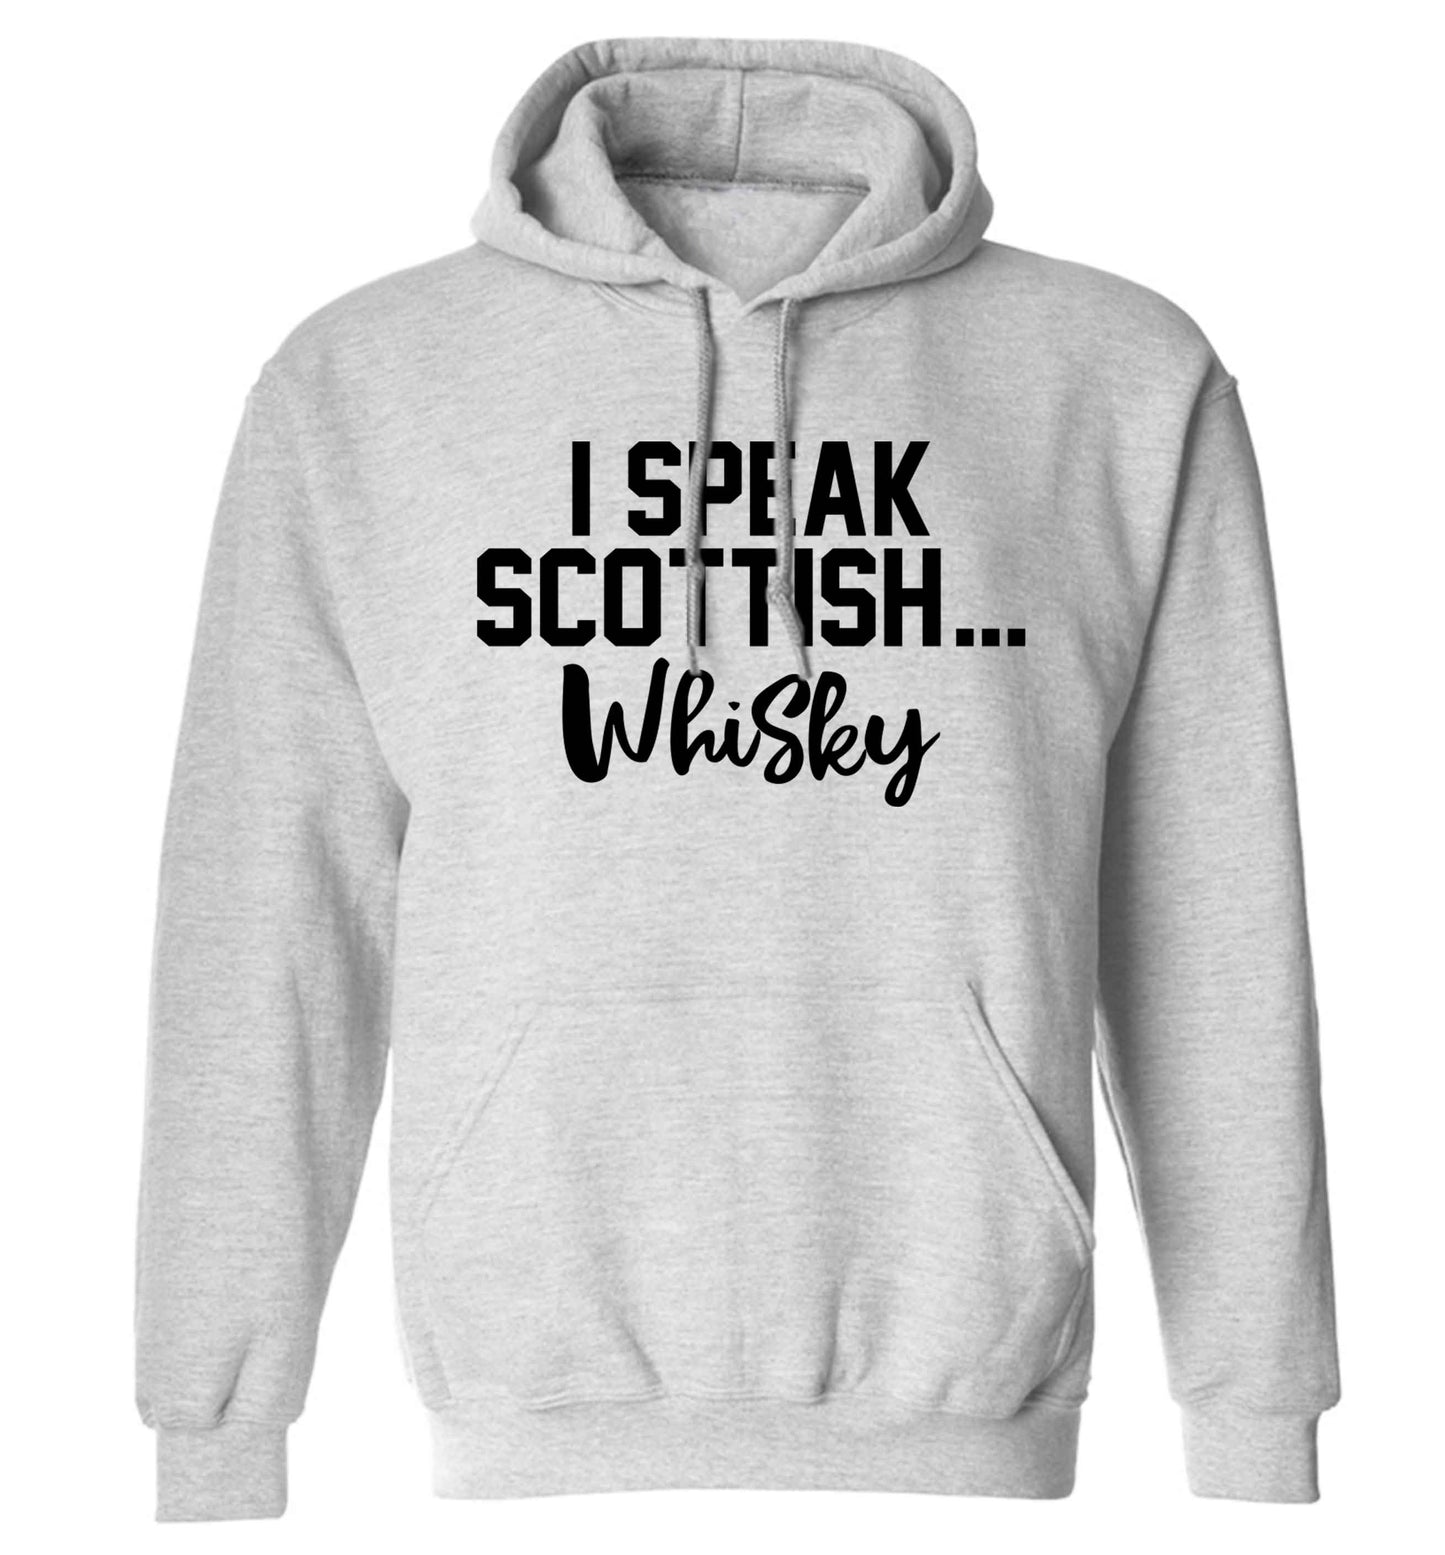 I speak scottish...whisky adults unisex grey hoodie 2XL